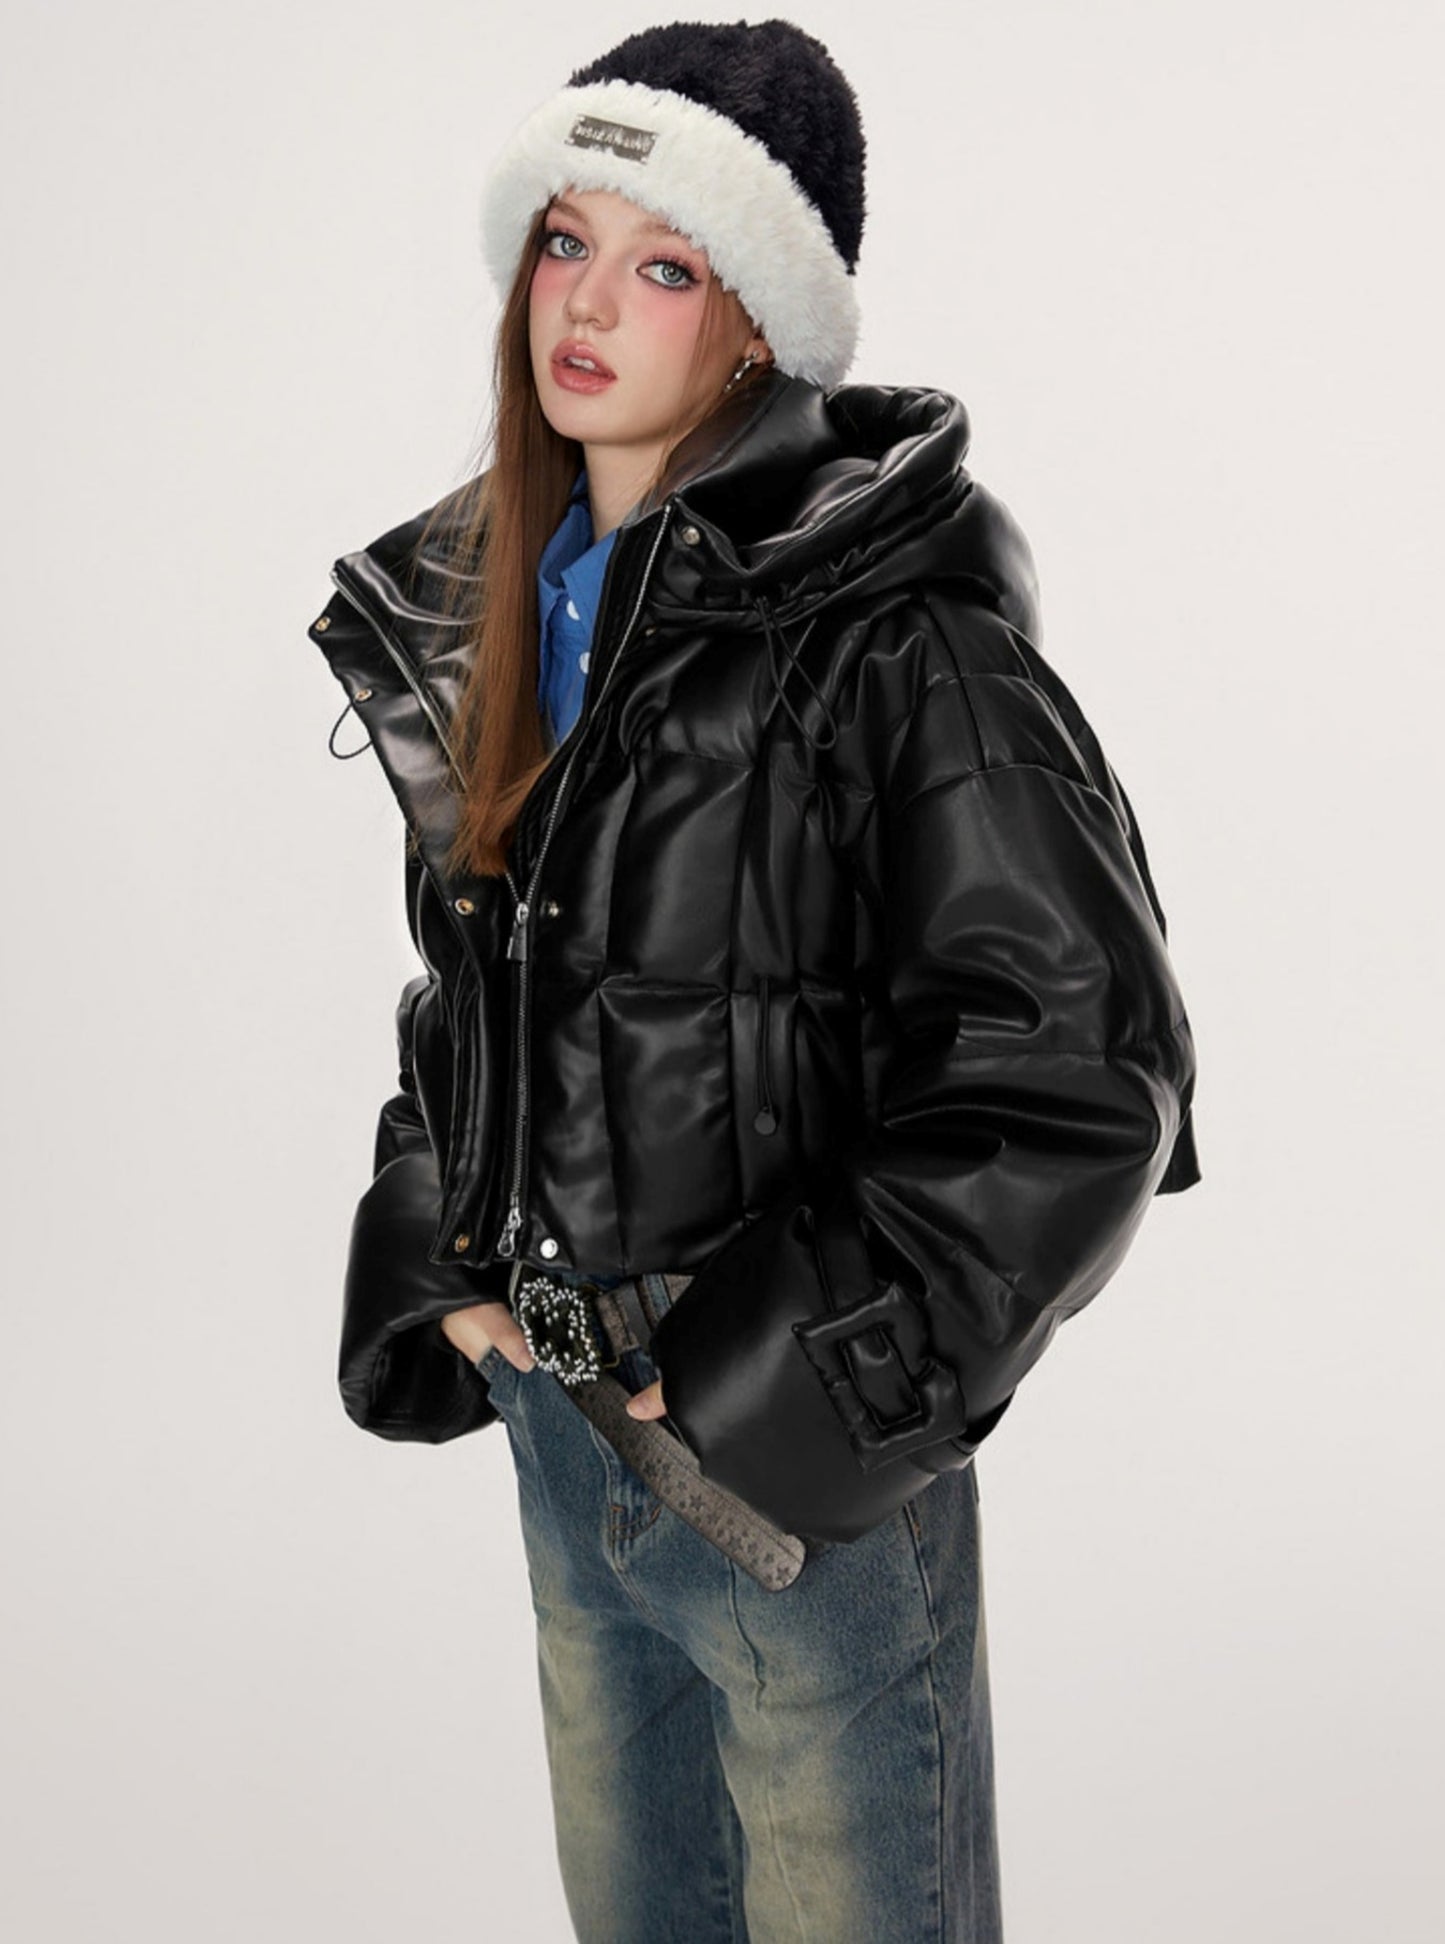 Retro biker style hooded warm leather jacket